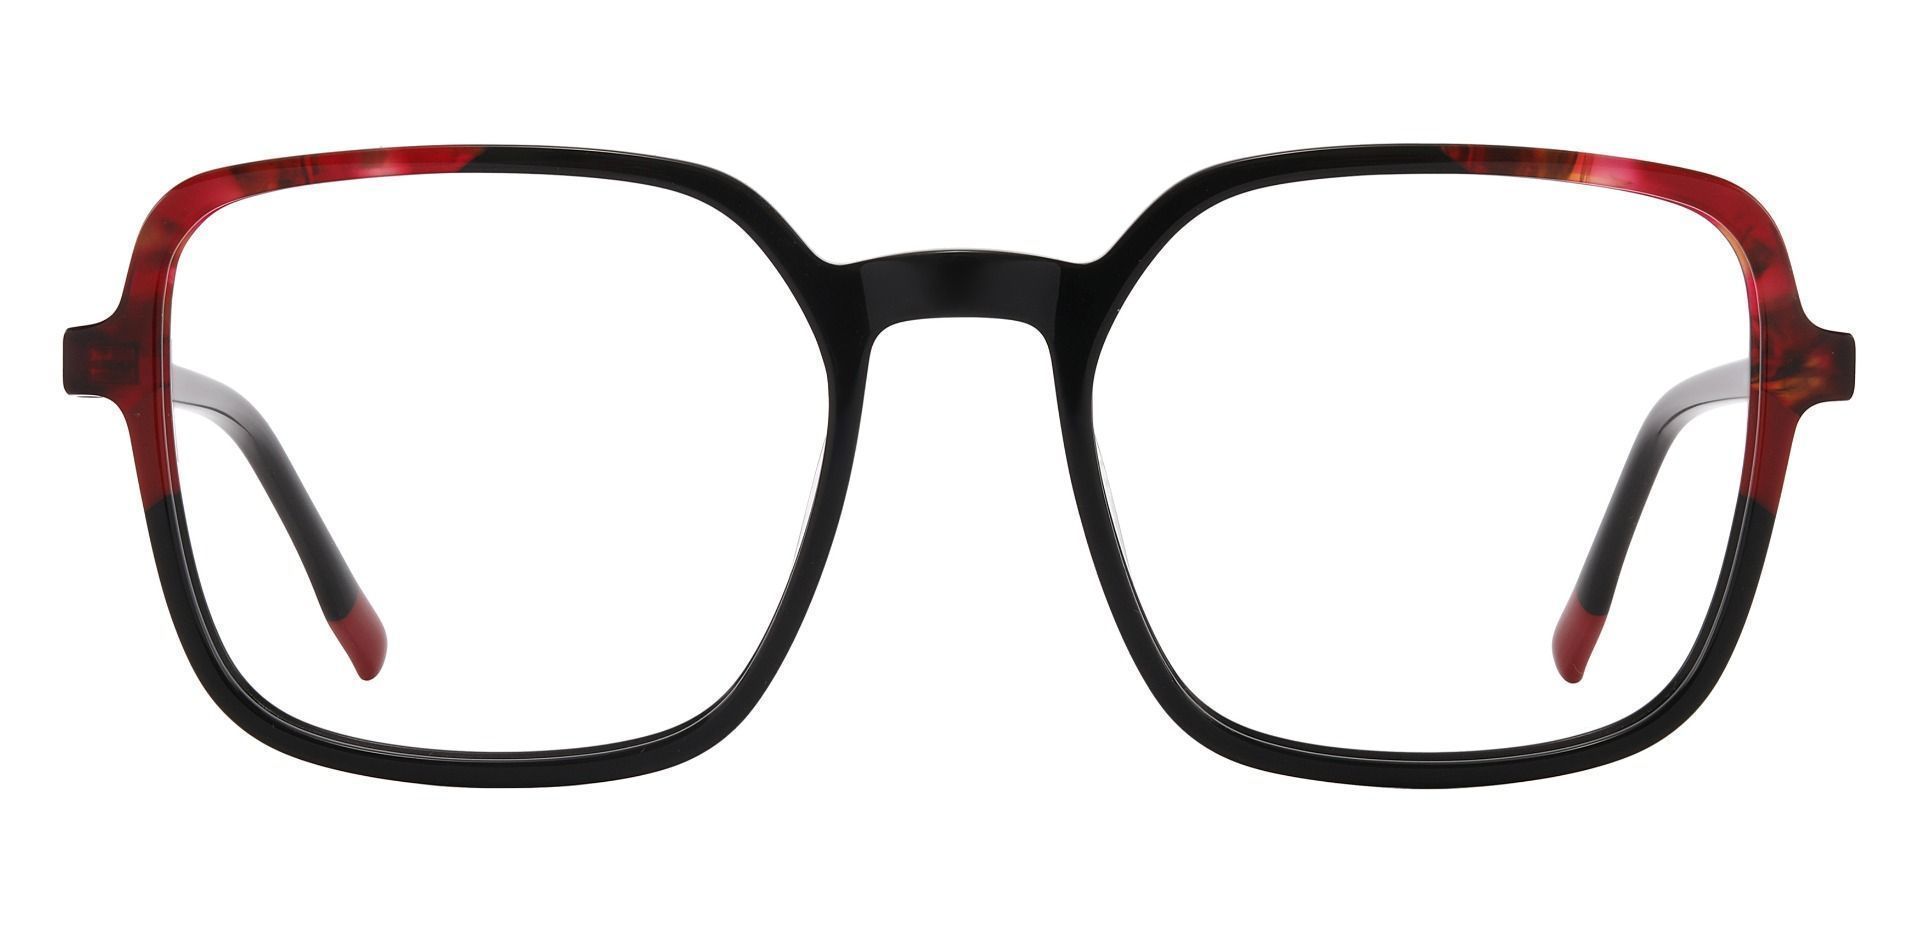 Medford Square Progressive Glasses - Black